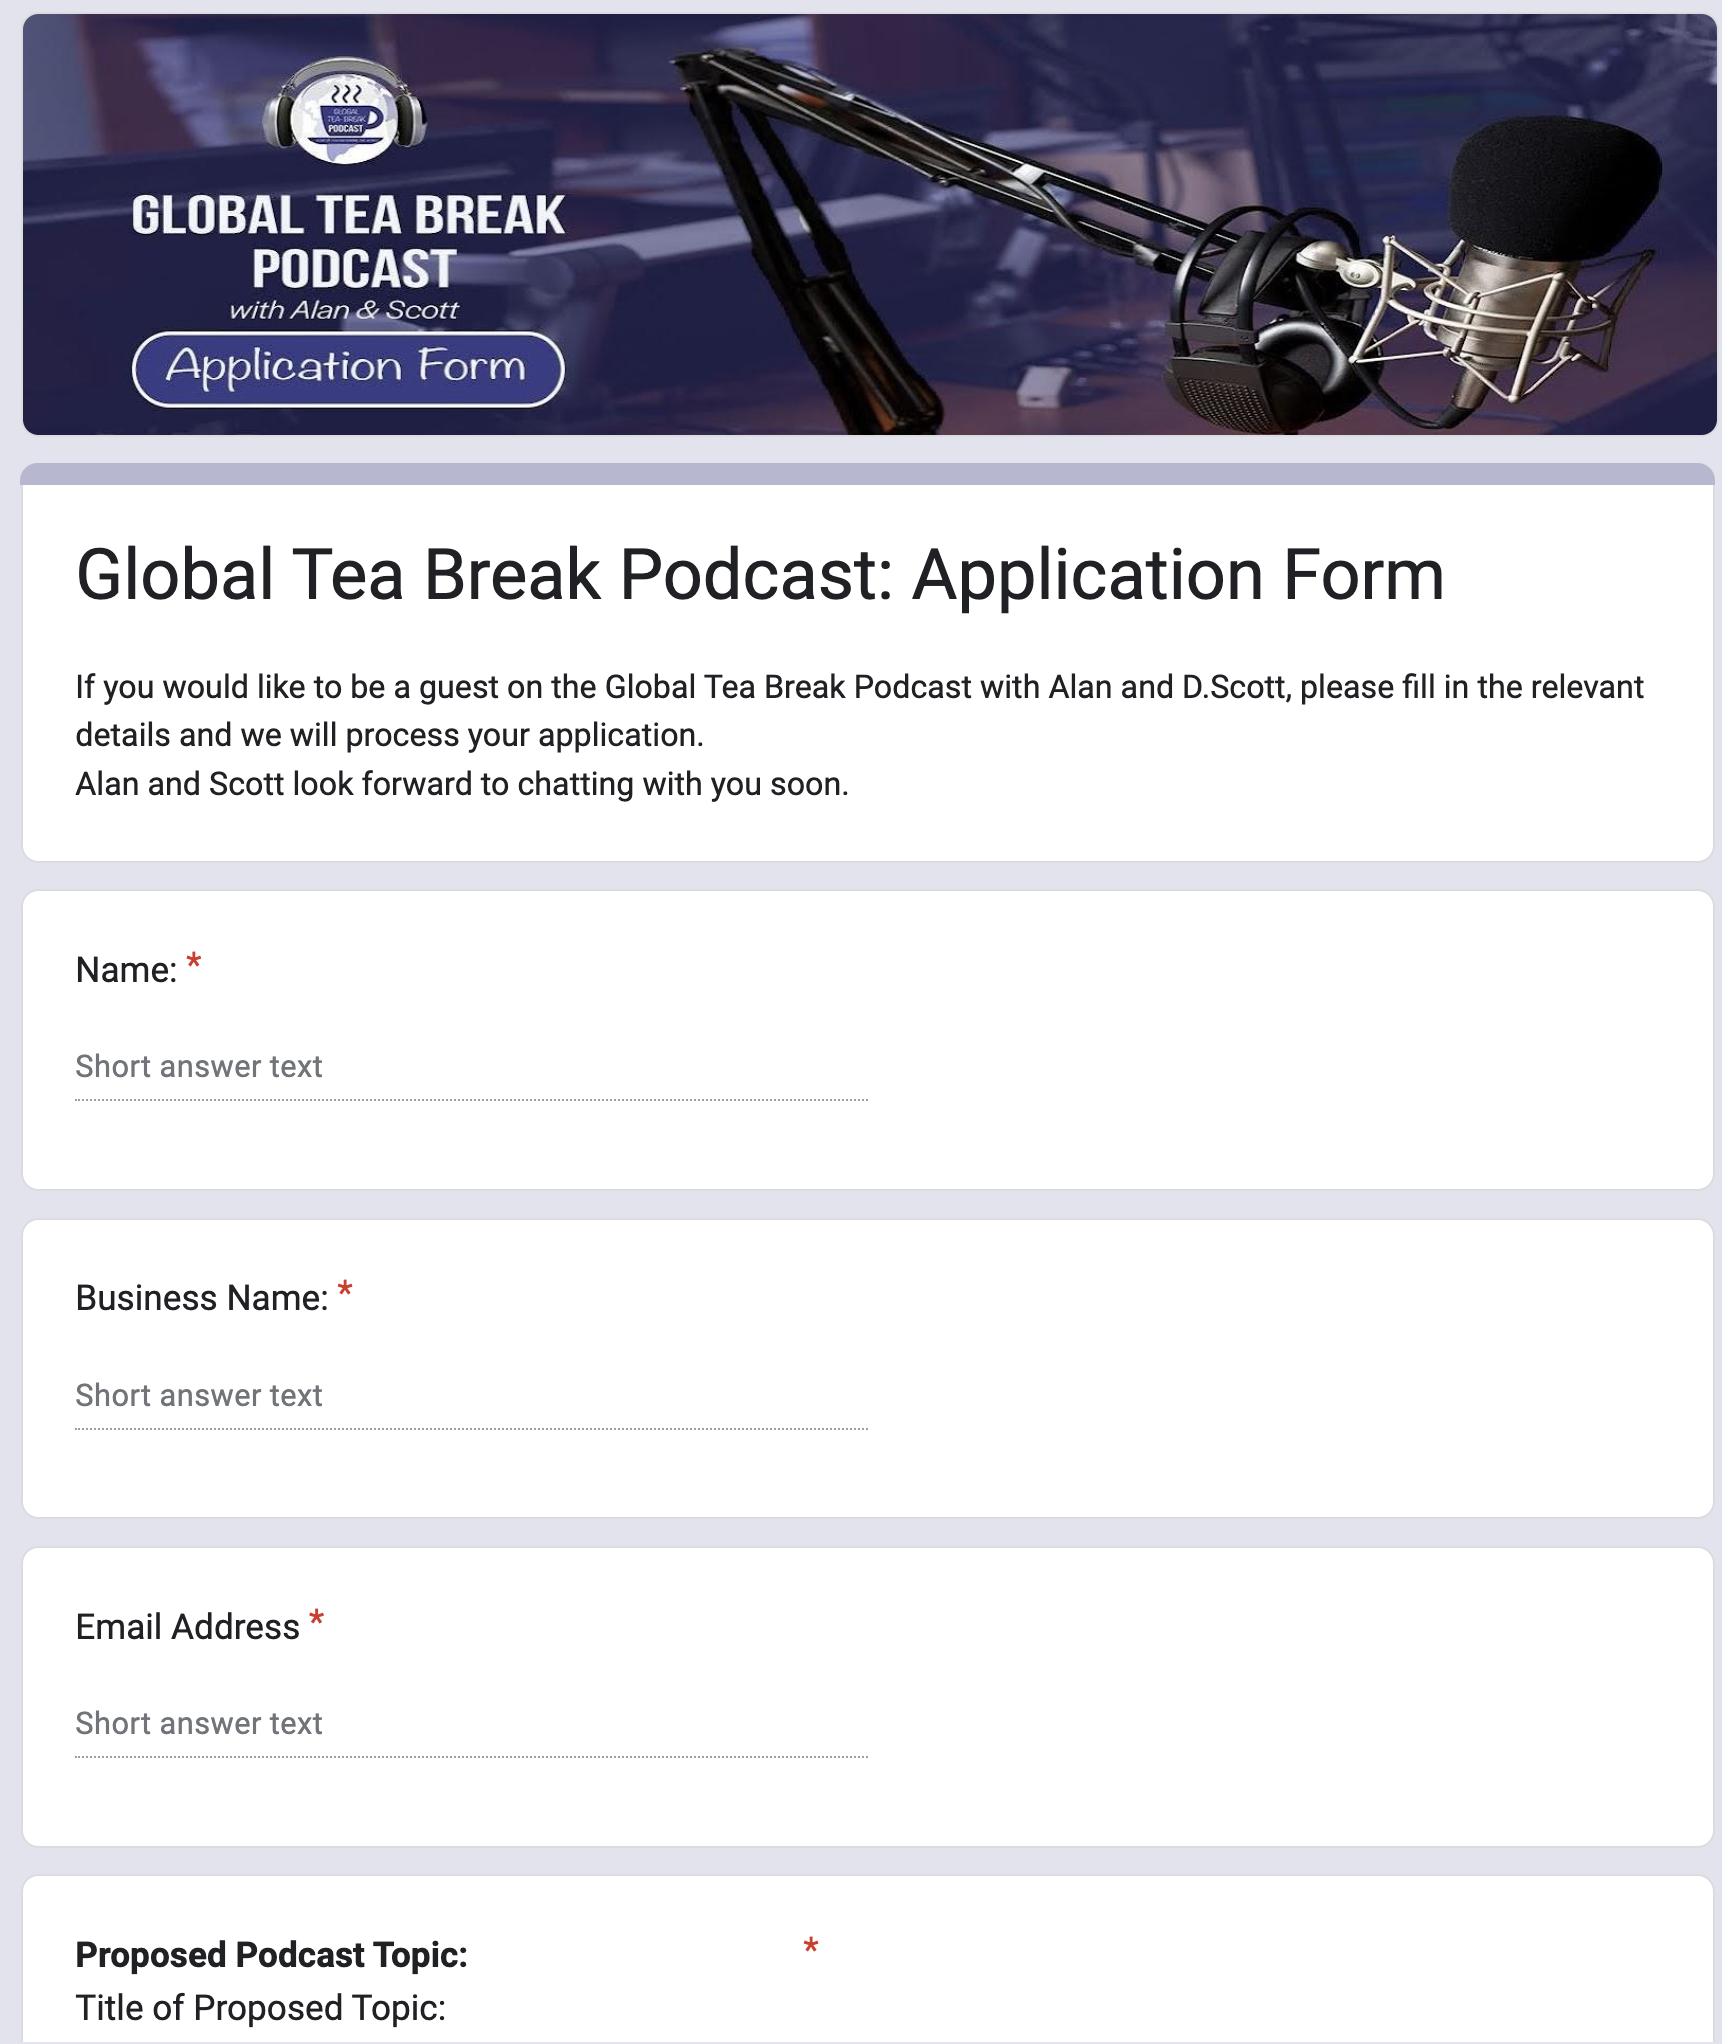 Global Tea Break Application Form